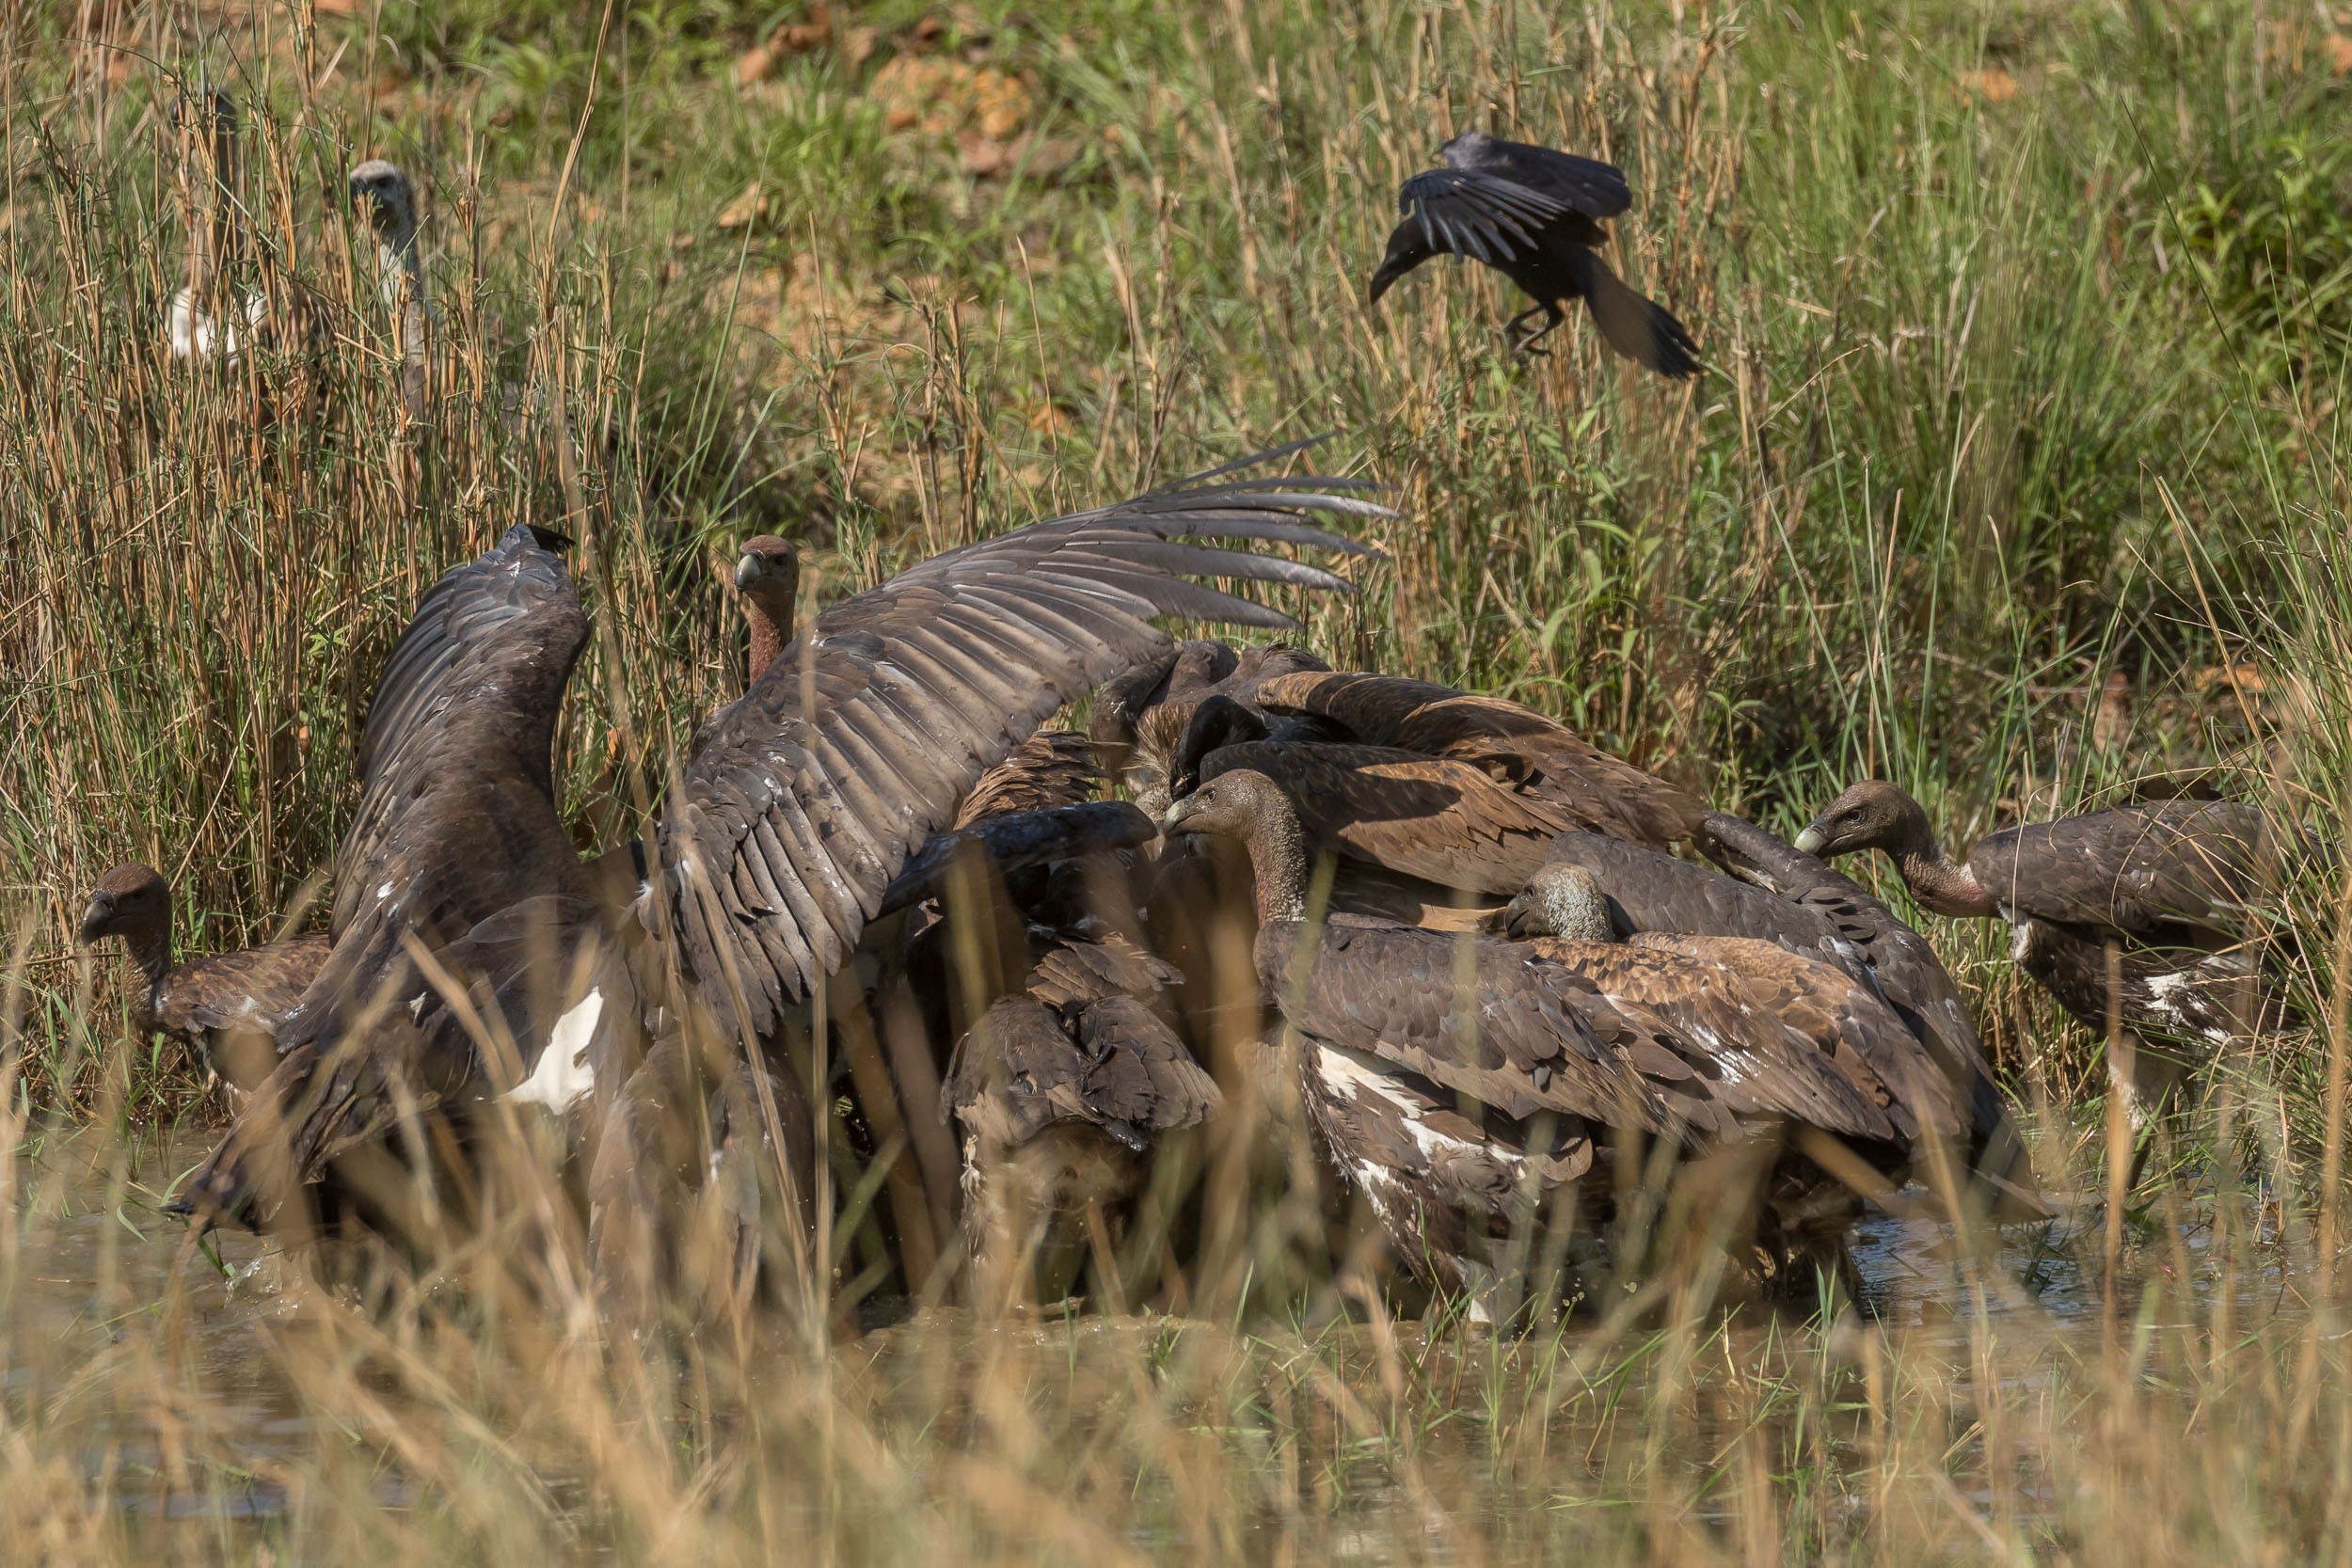 Vultures feeding